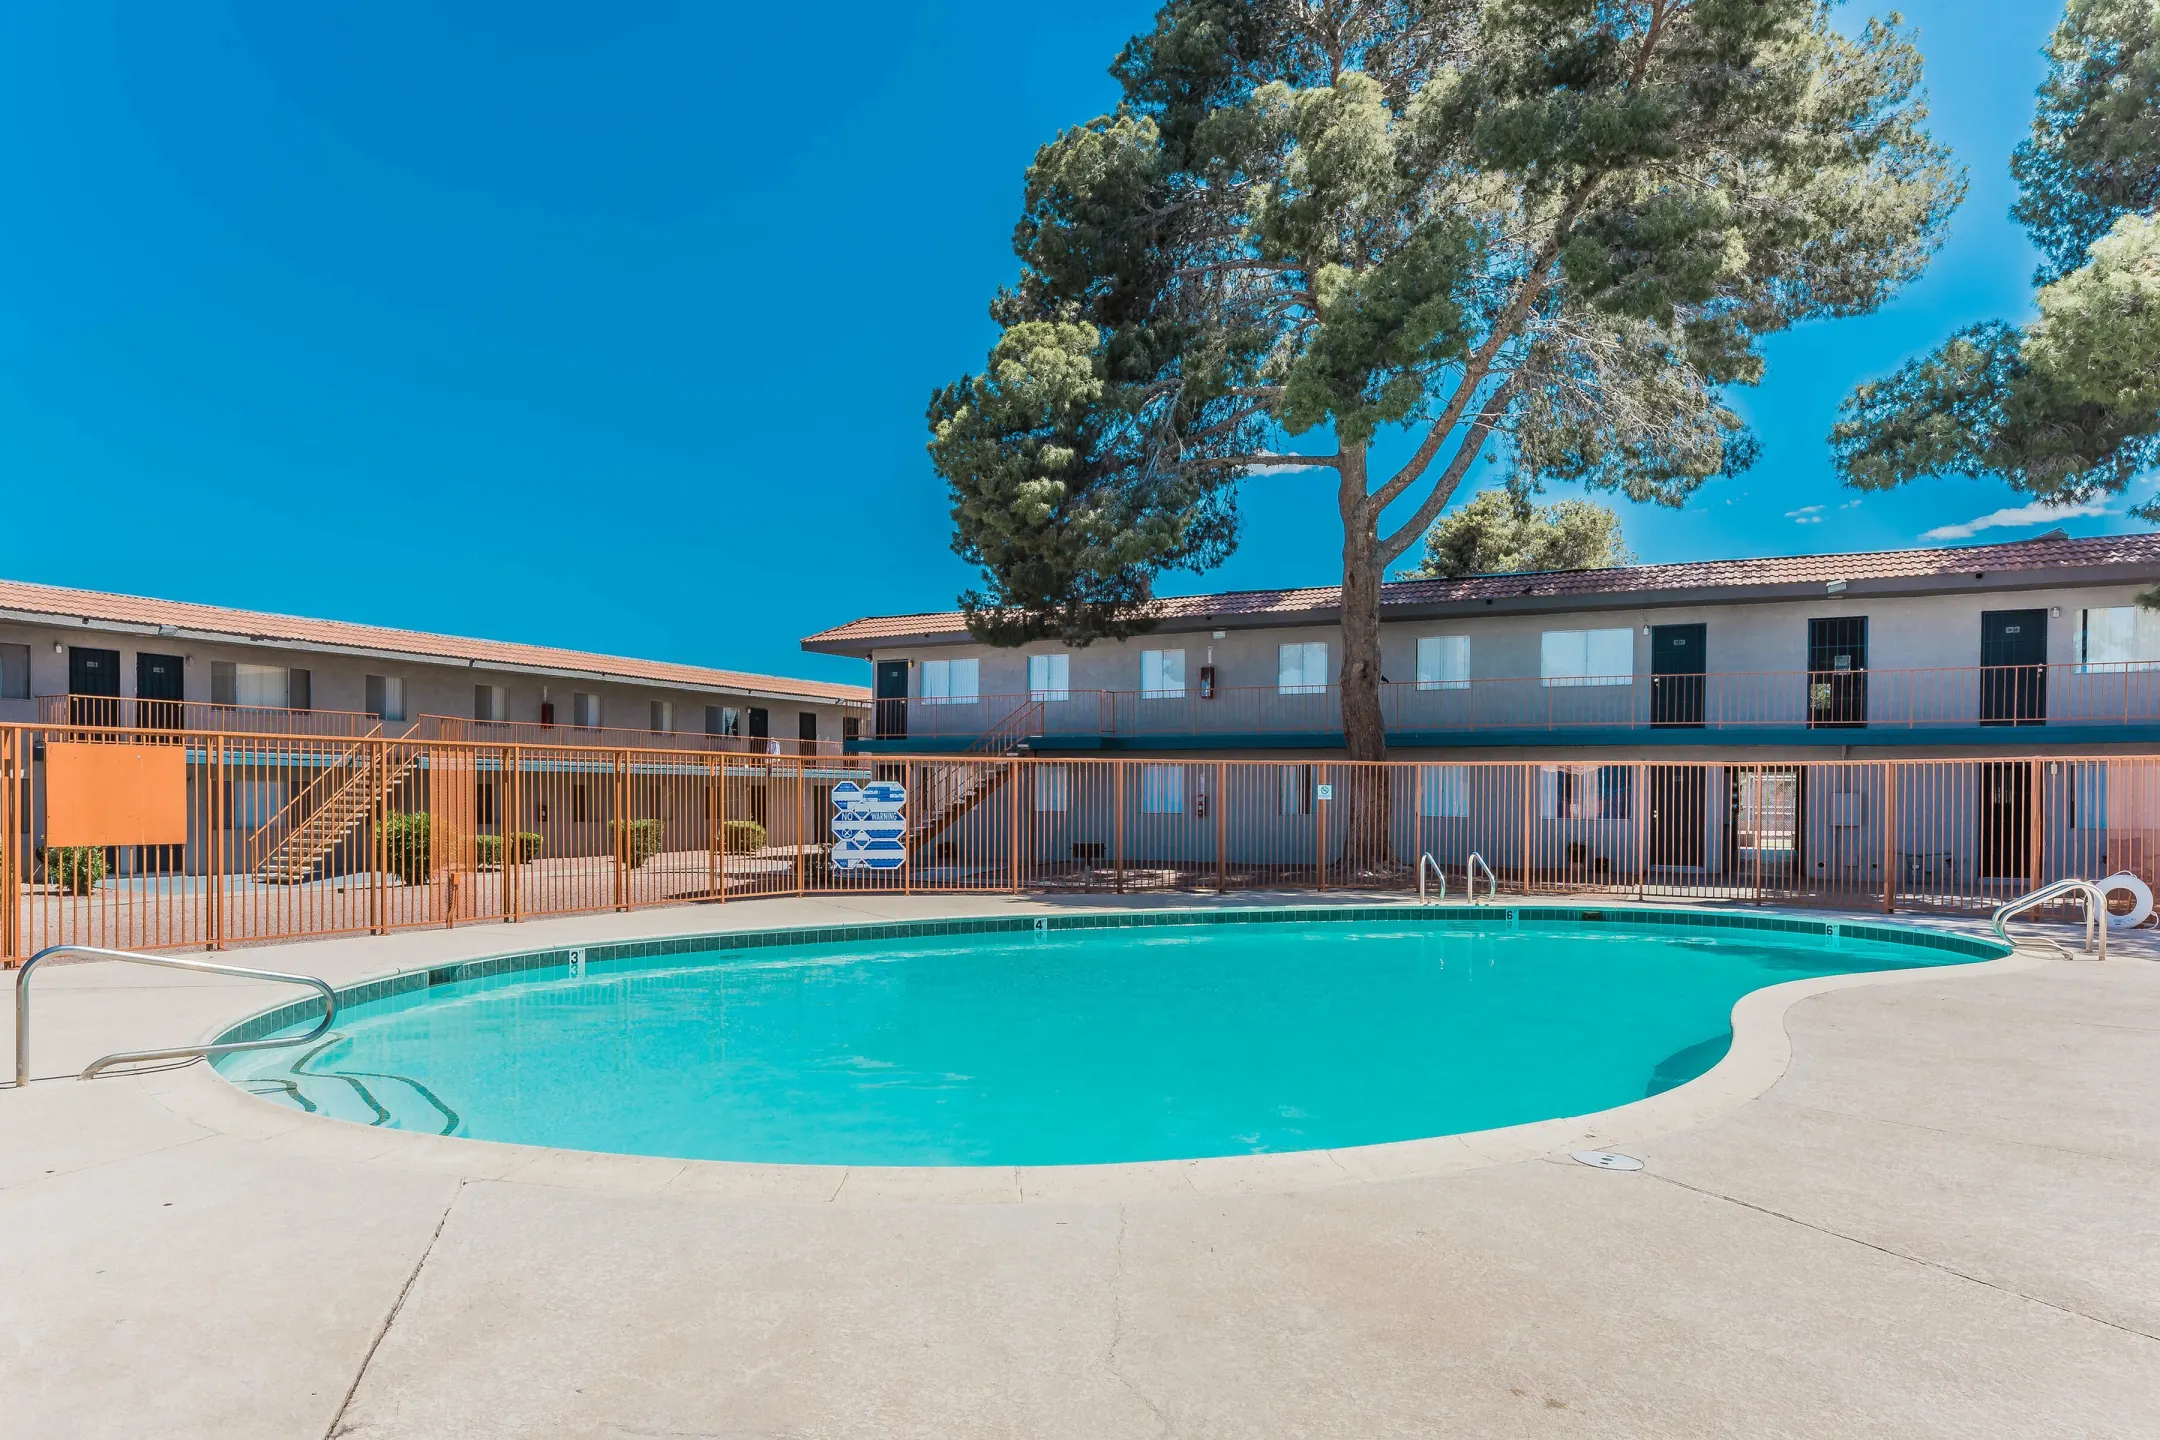 Pool - Arville Park Apartments - Las Vegas, NV